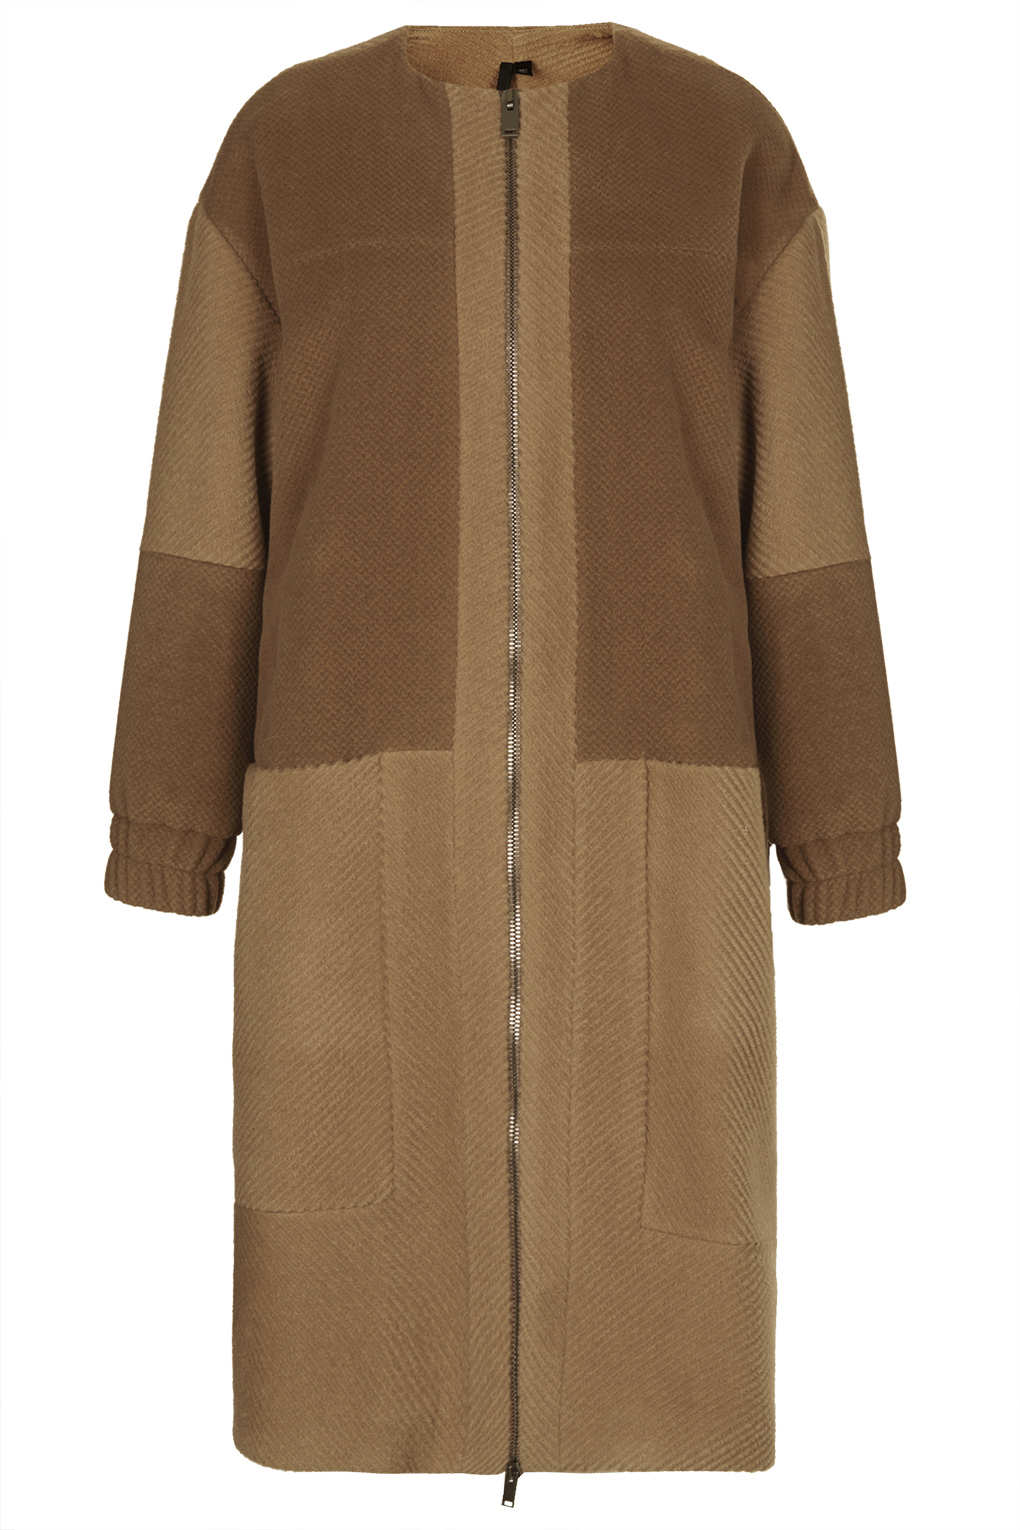 Lyst - Topshop Wool Longline Textured Coat in Brown